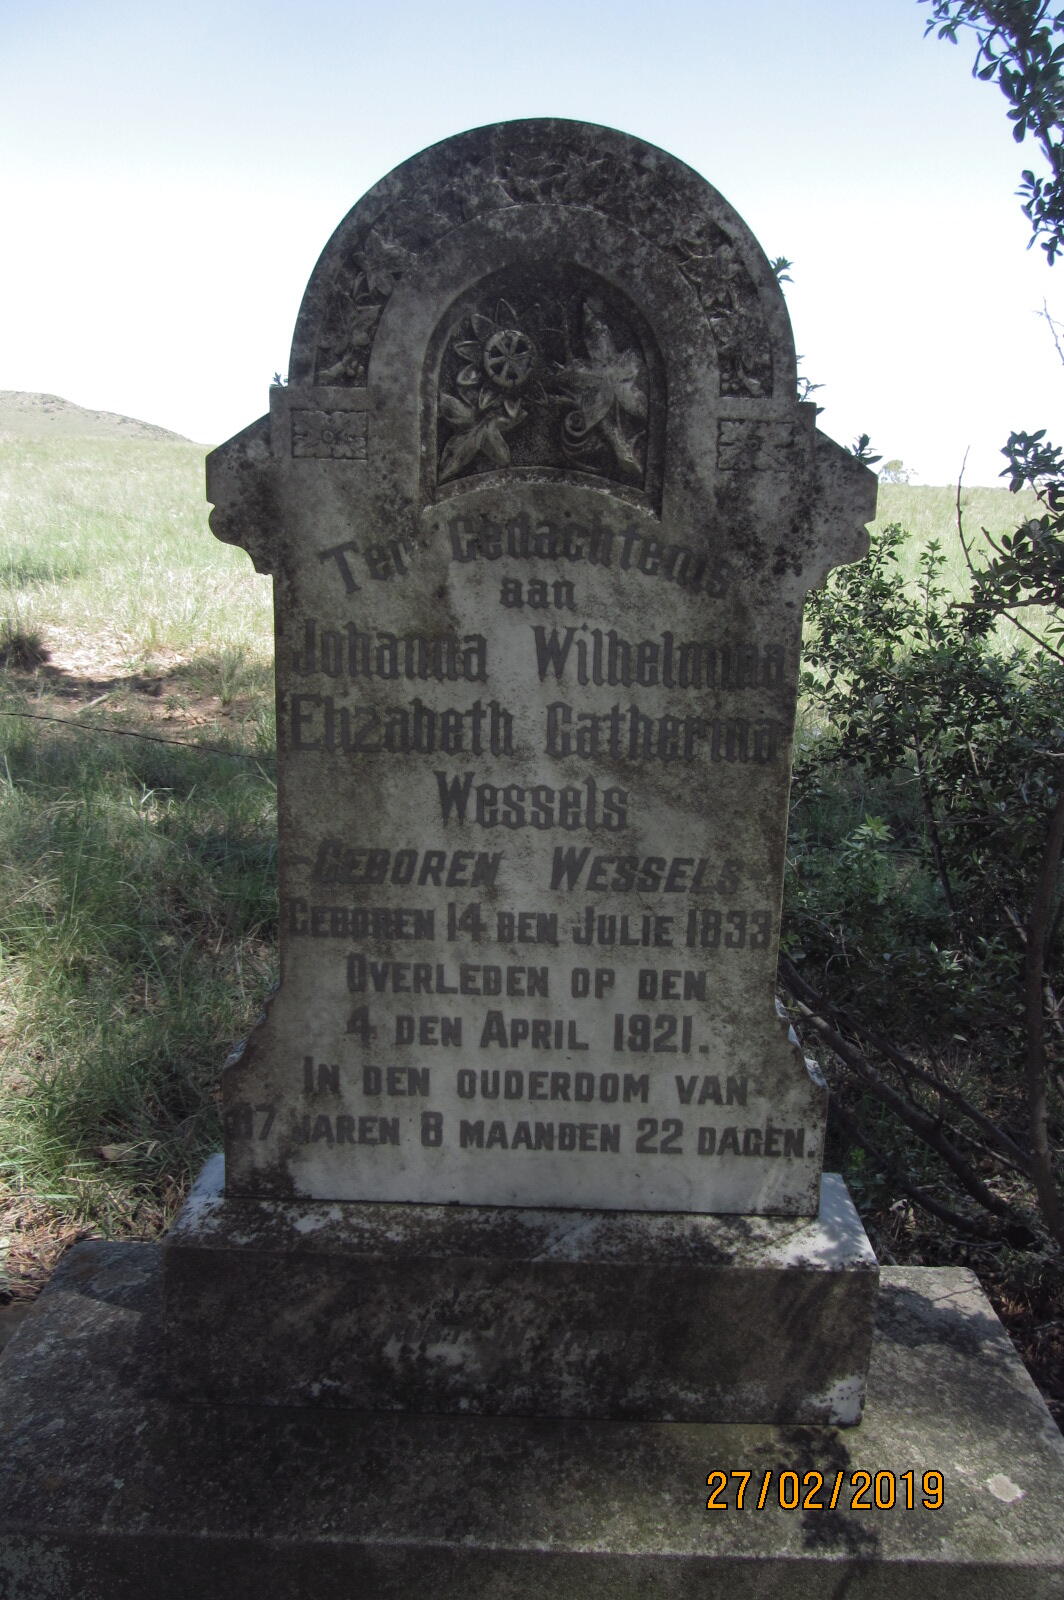 WESSELS Johanna Wilhelmina Elizabeth Catherina nee WESSELS 1833-1921